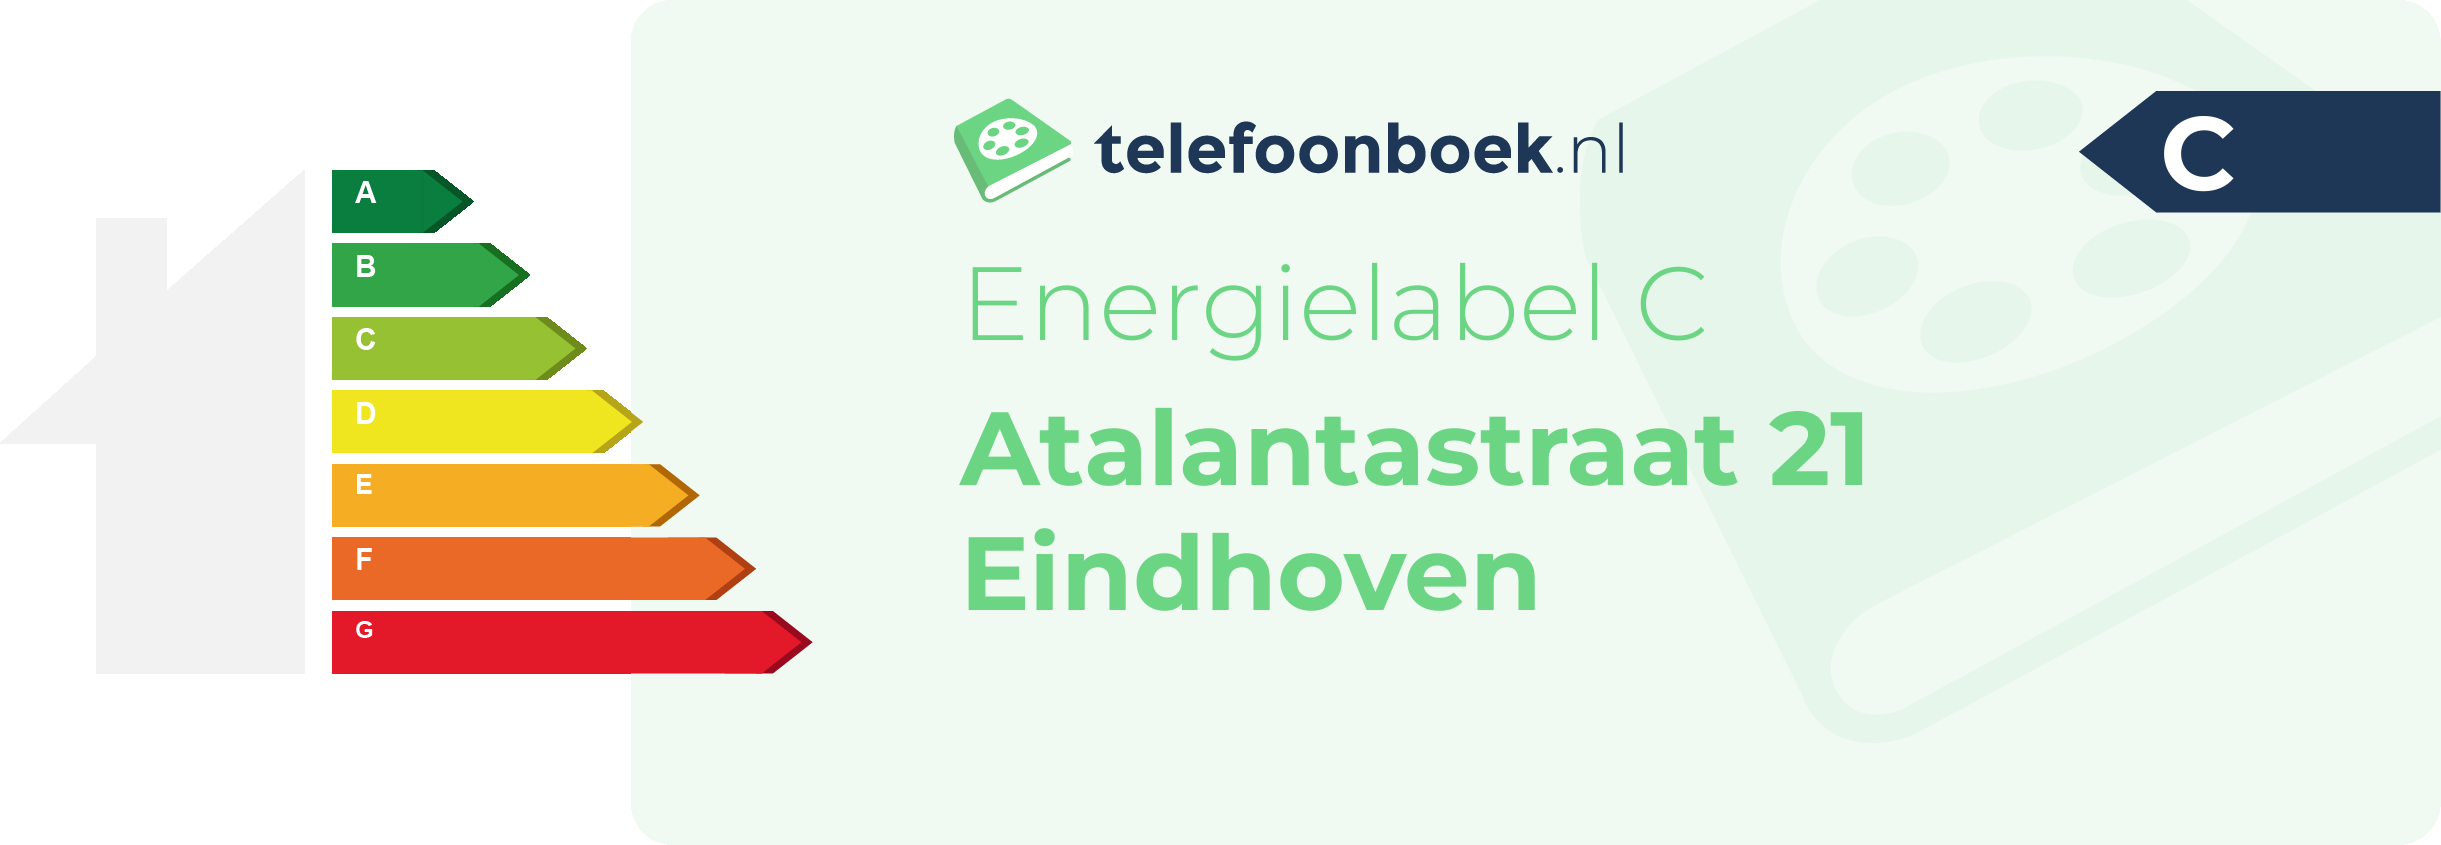 Energielabel Atalantastraat 21 Eindhoven